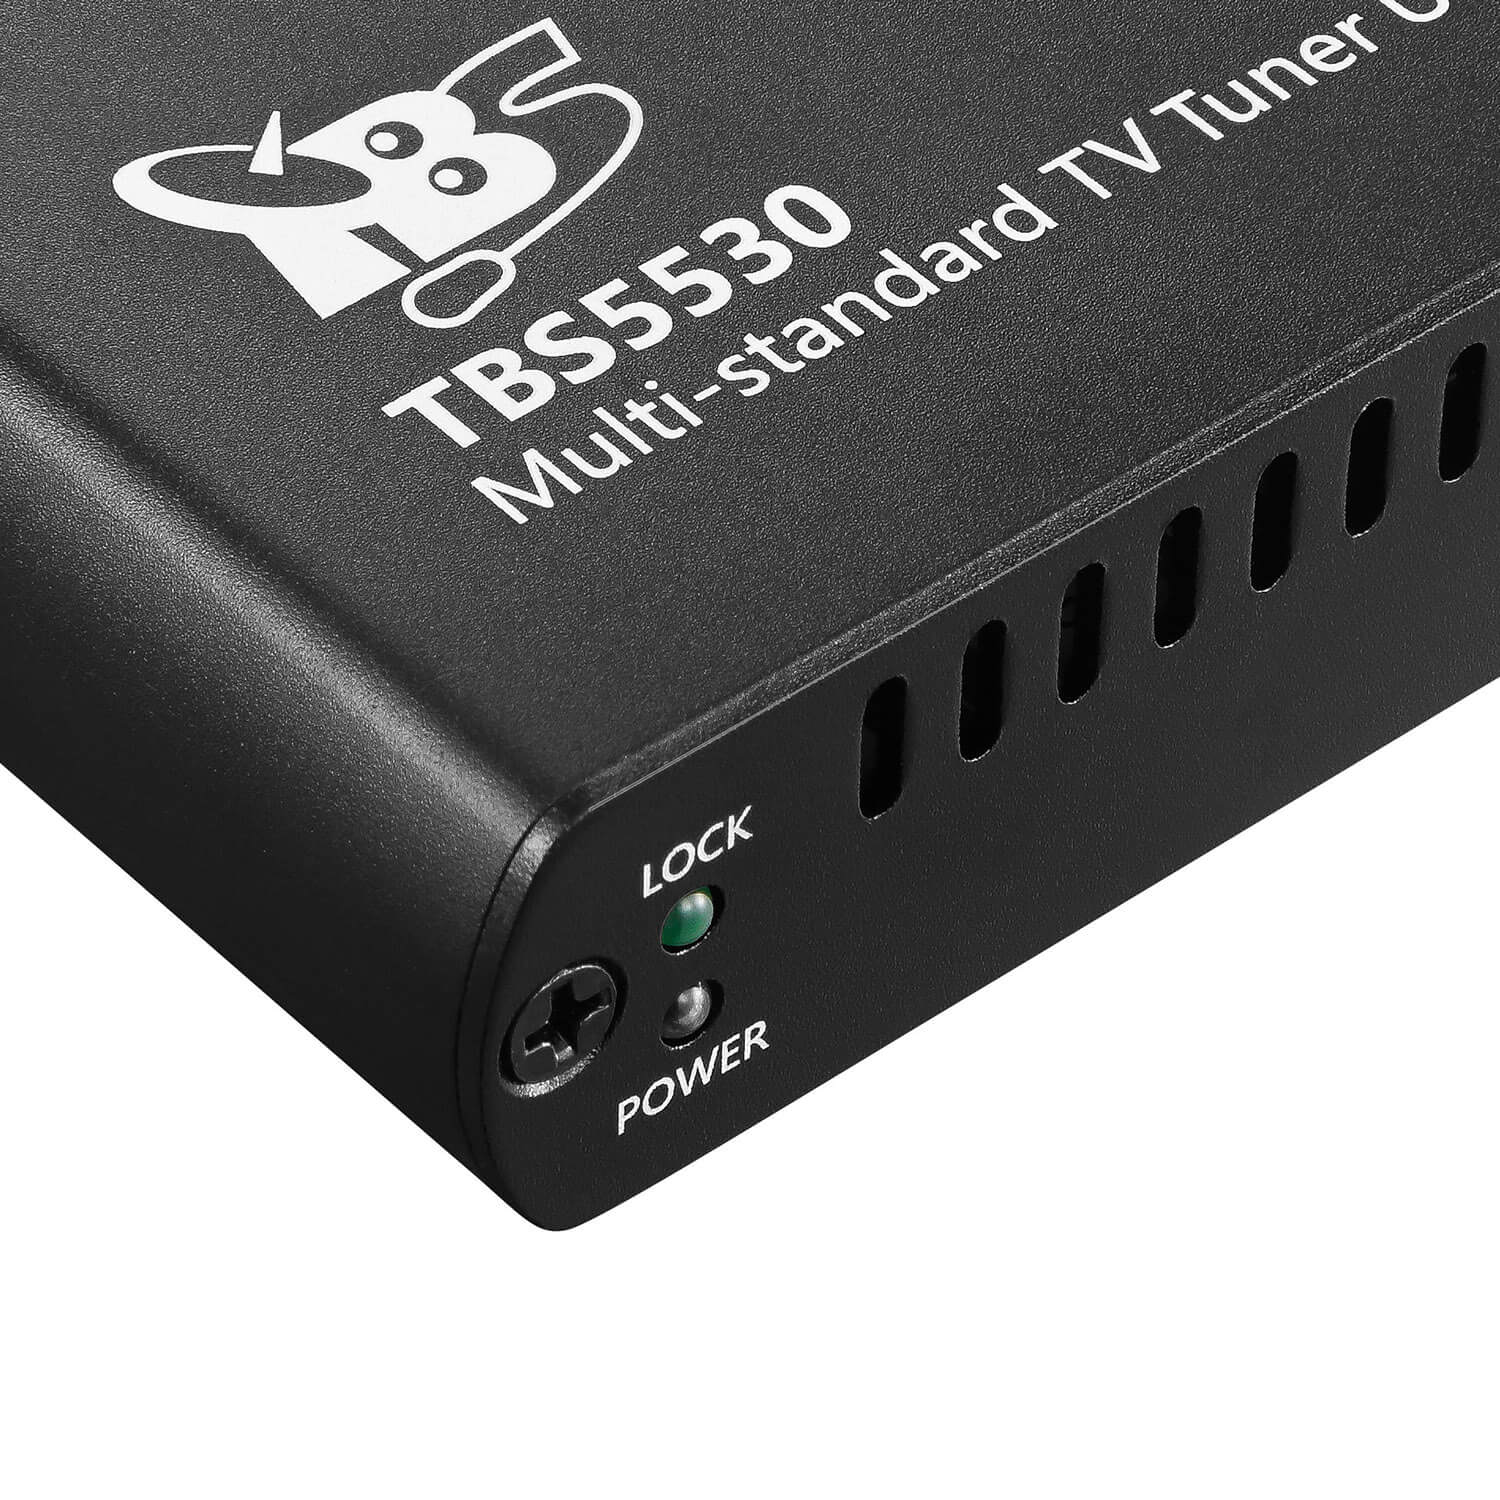 TBS5530 Multi-standard Universal TV Tuner USB Card [TBS5530] : TBS 